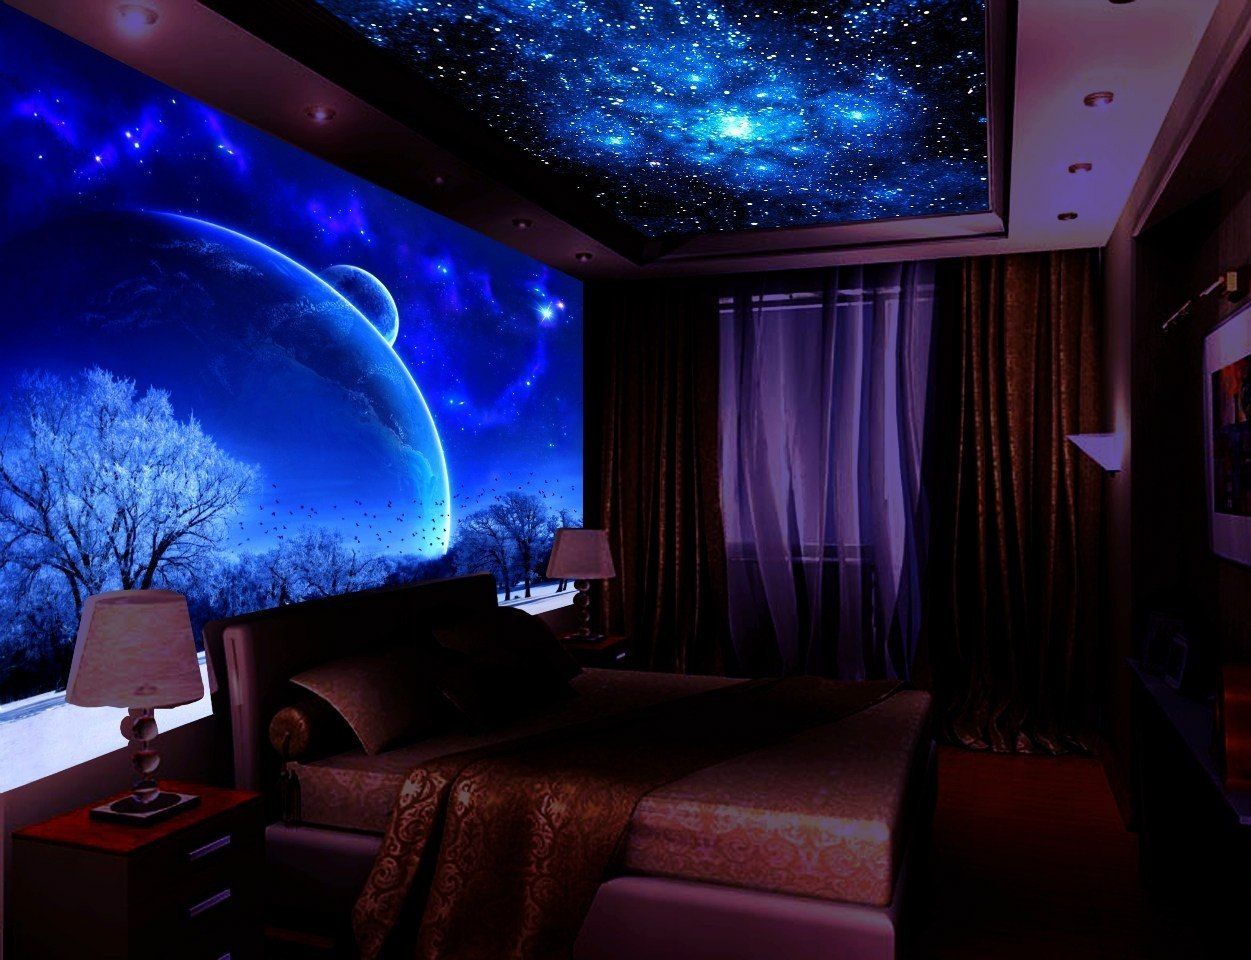 galaxy wallpaper for bedroom walls,room,lighting,purple,ceiling,interior design